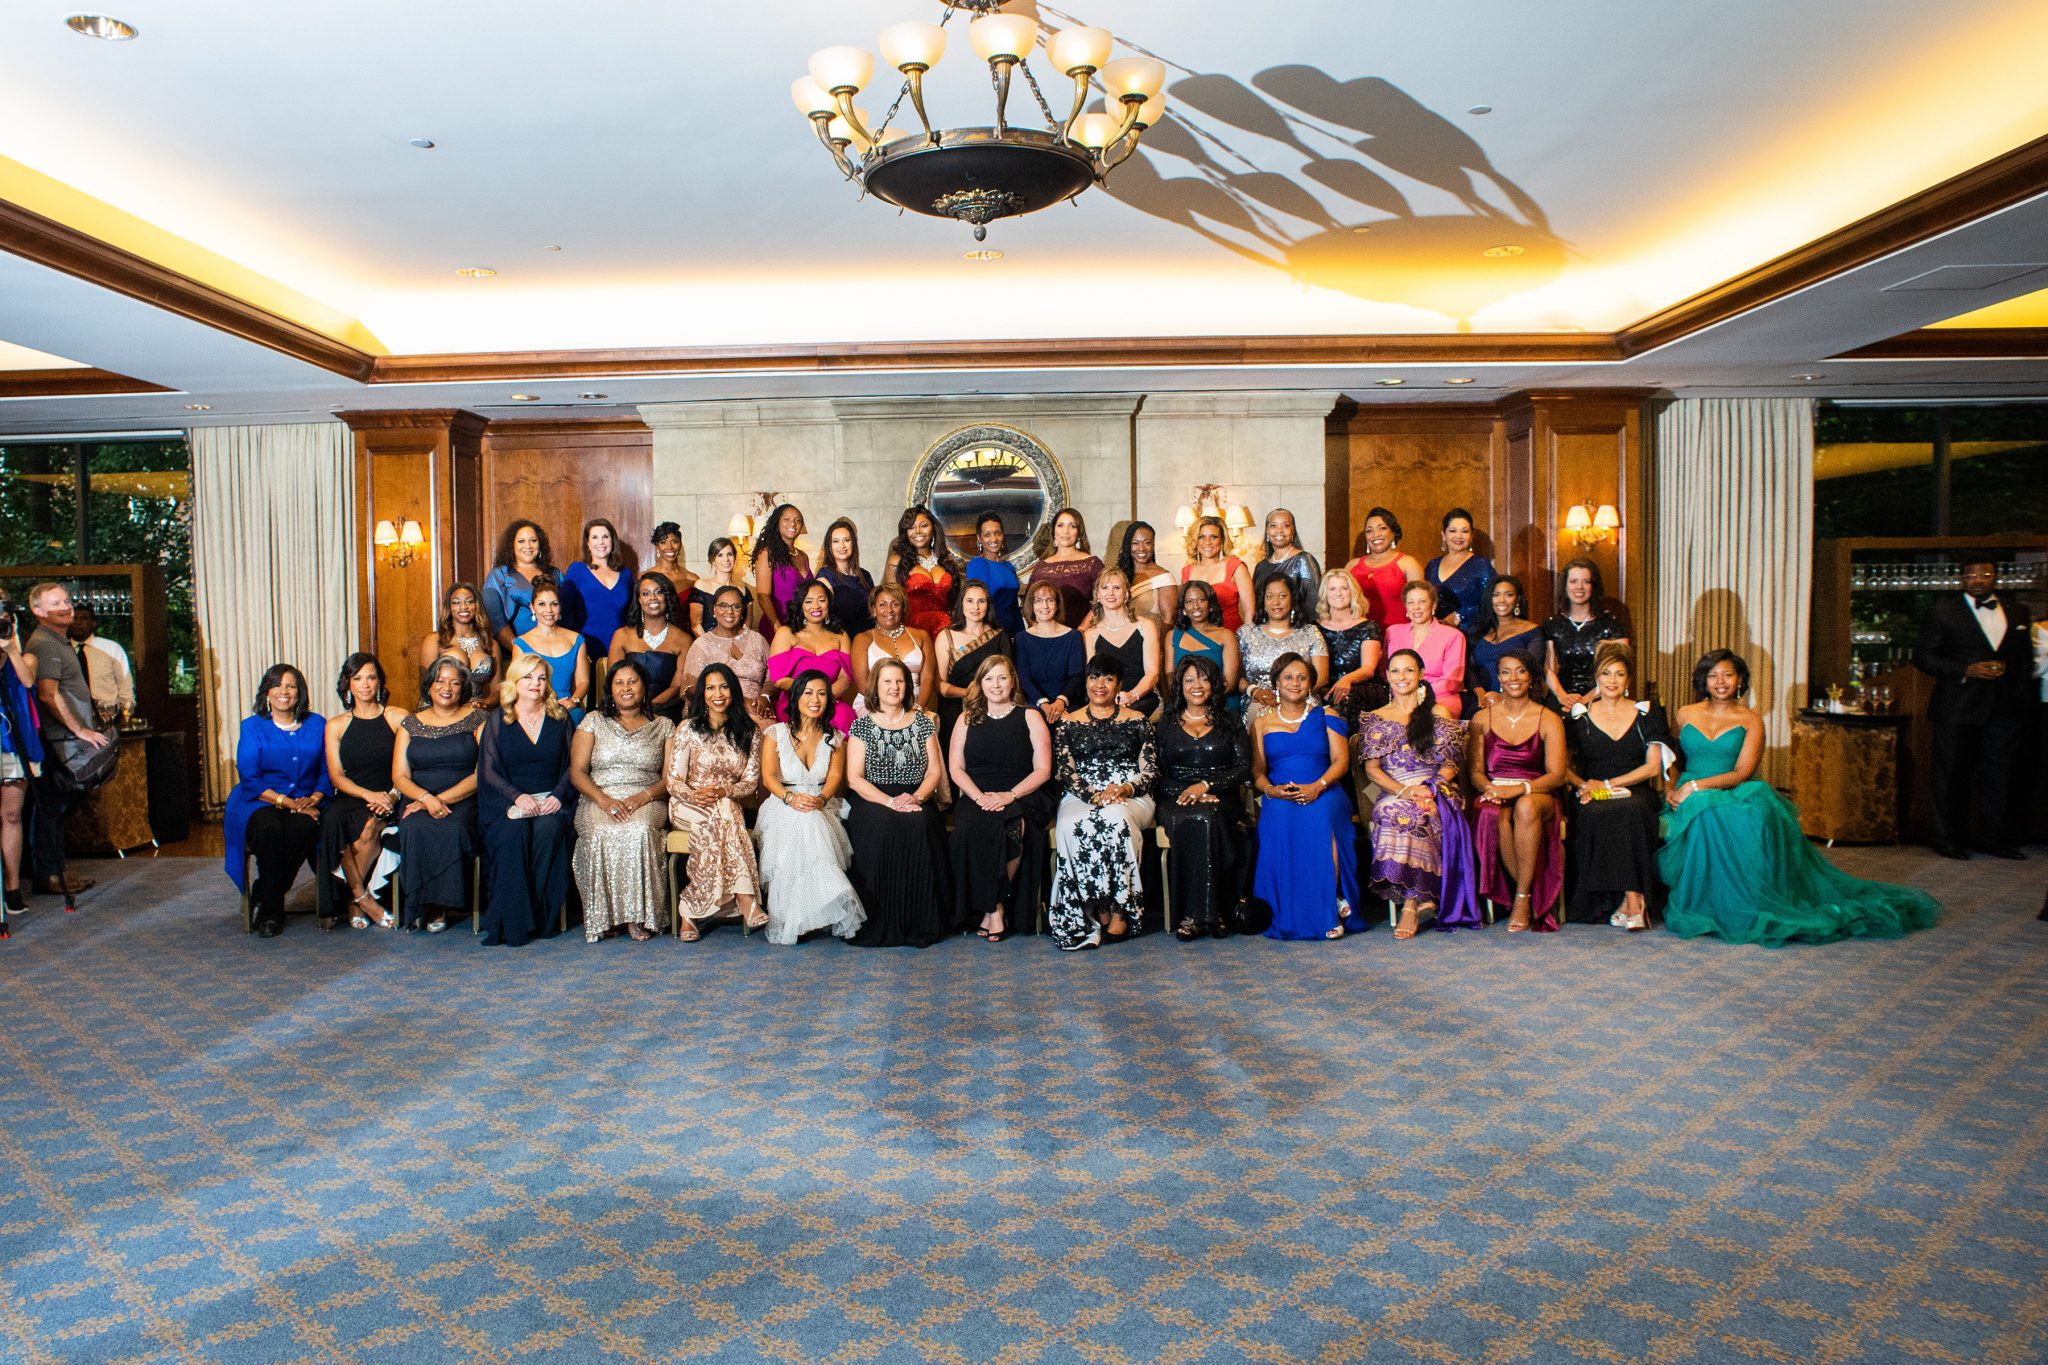 d-mars.com Celebrates Top 30 Influential Women of Houston - Top 30 Women